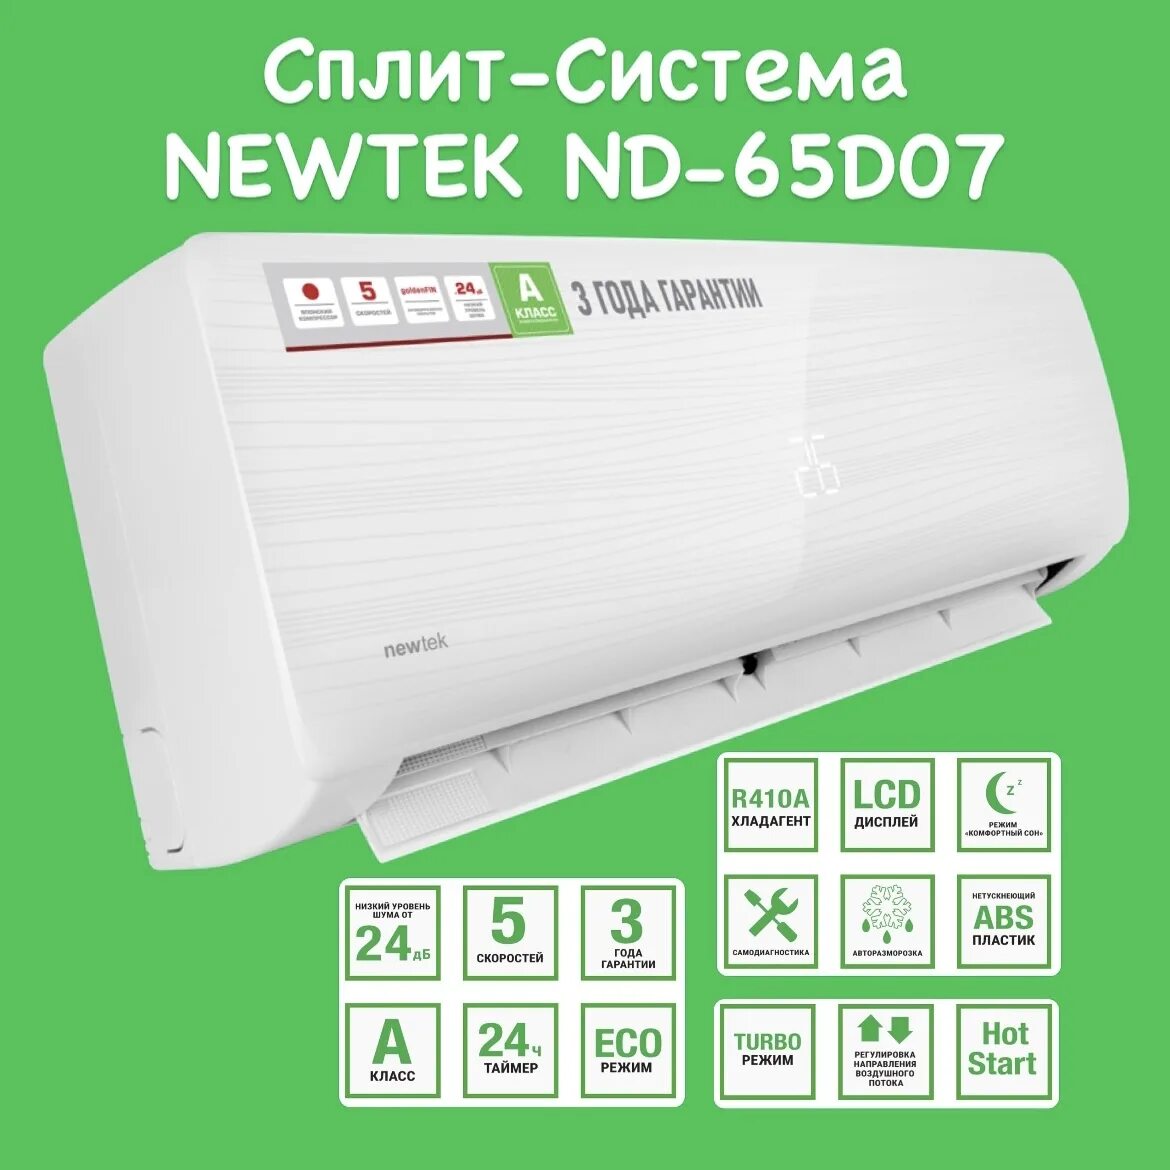 Сплит система newtek 65chb07. NEWTEK NT-65d07. Сплит-система NEWTEK NT-65p09. Сплит-система NEWTEK NT-65chndc12 инвертор. Сплит-система Whirlpool who49lb.